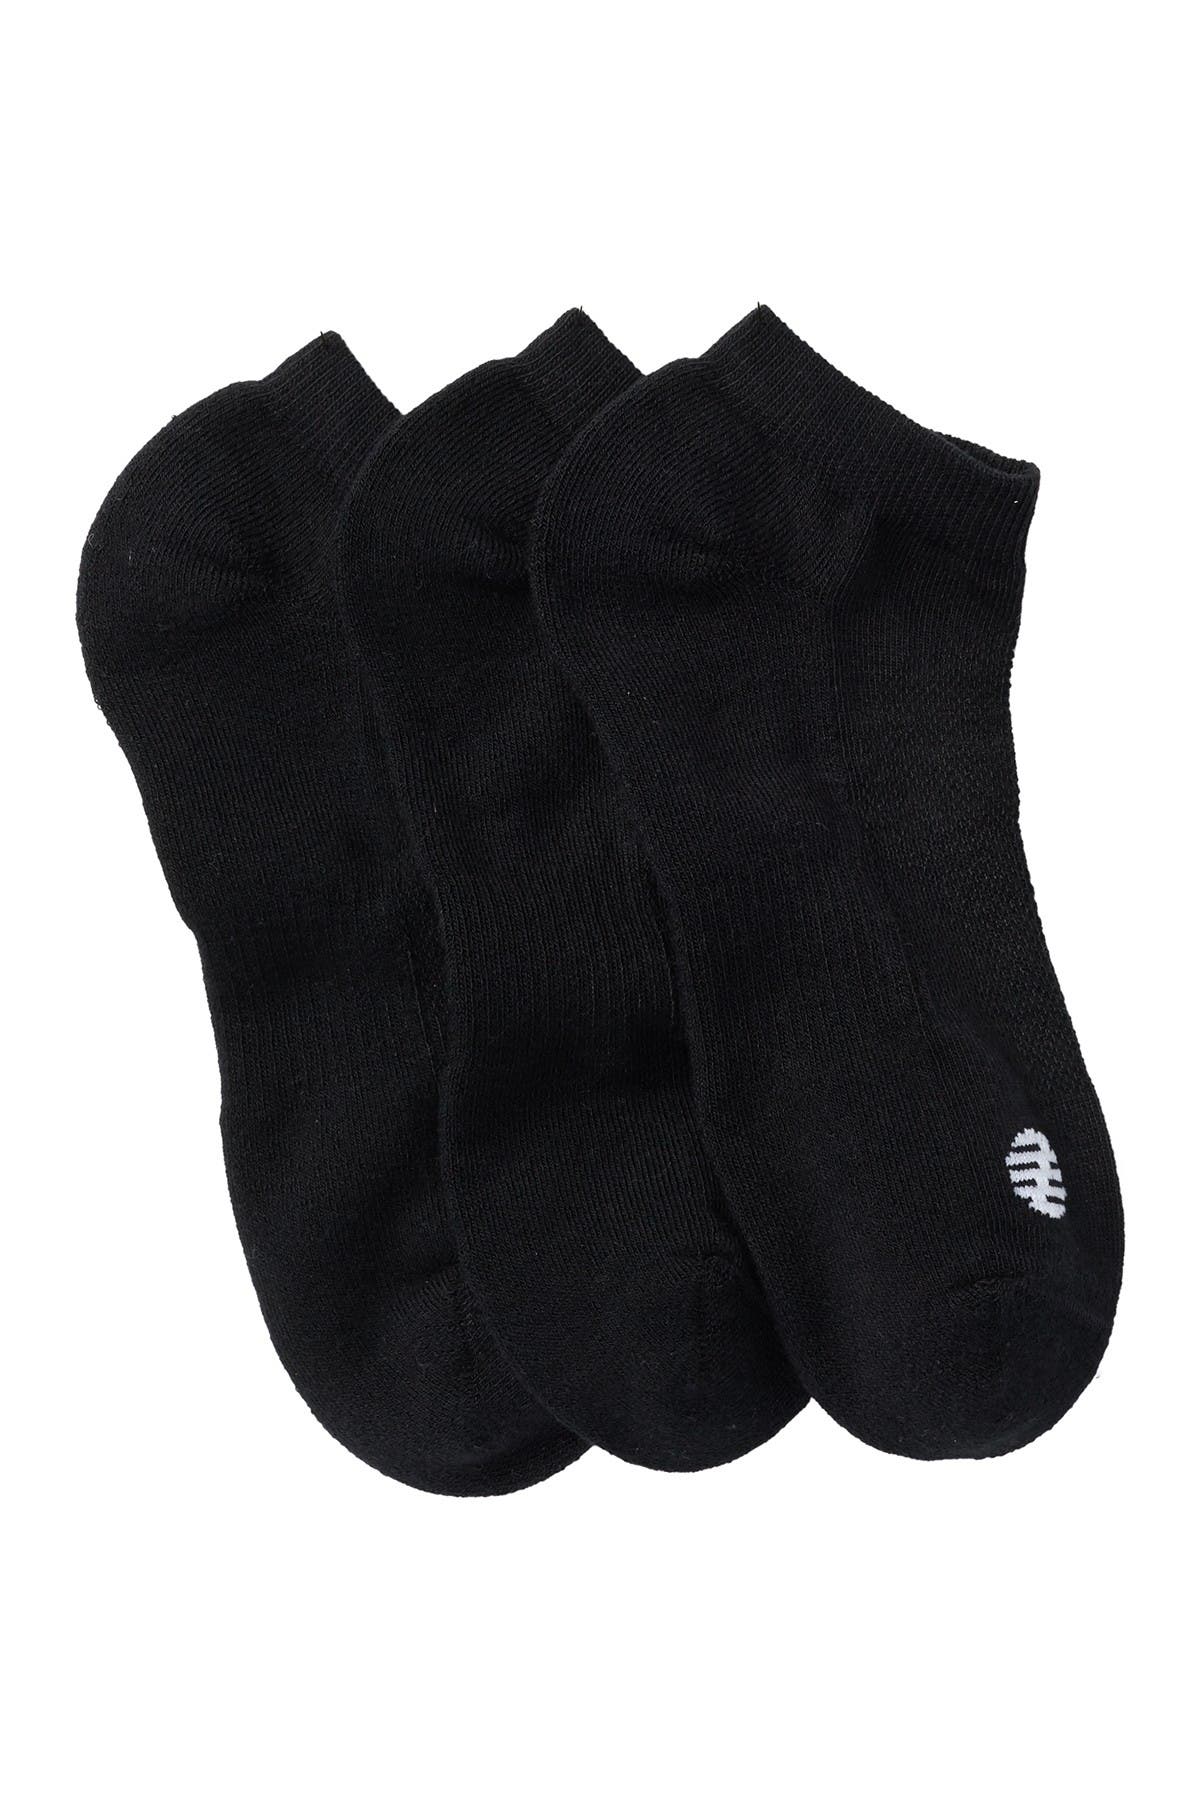 Brother Gift Black Socks Size 6-11